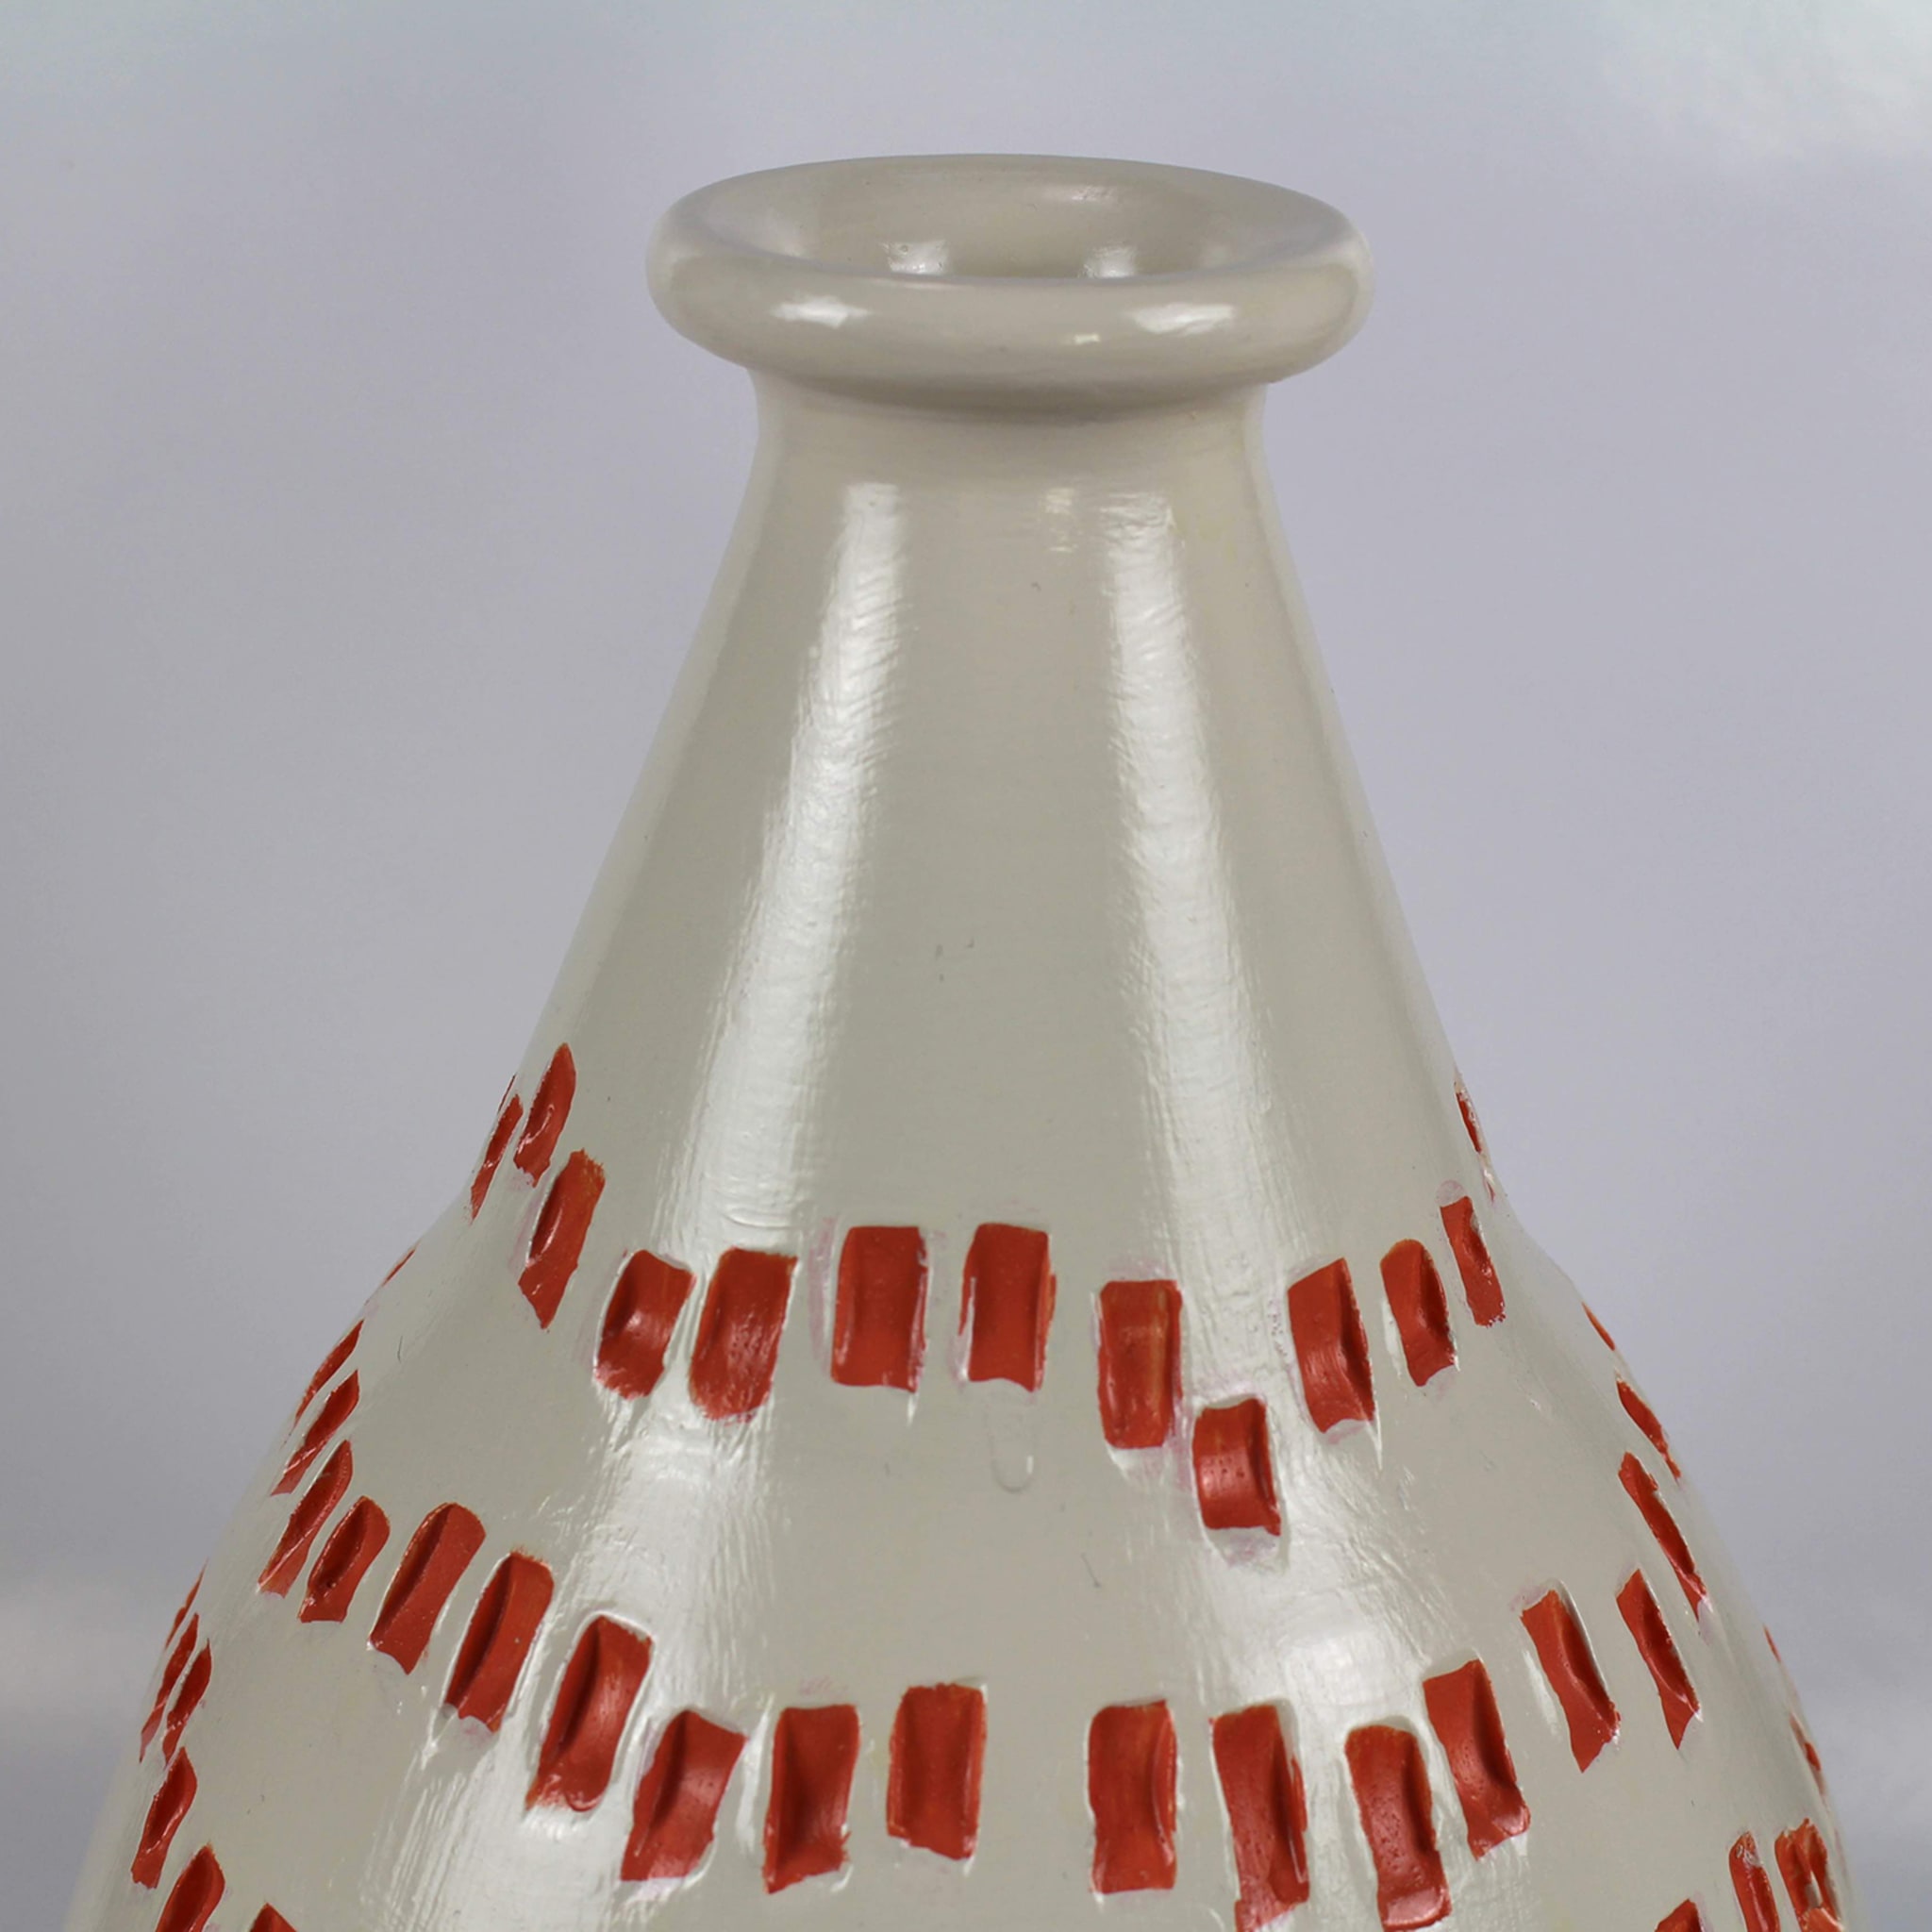 Drop-Shaped Beige & Red Vase 17 by Mascia Meccani - Alternative view 3